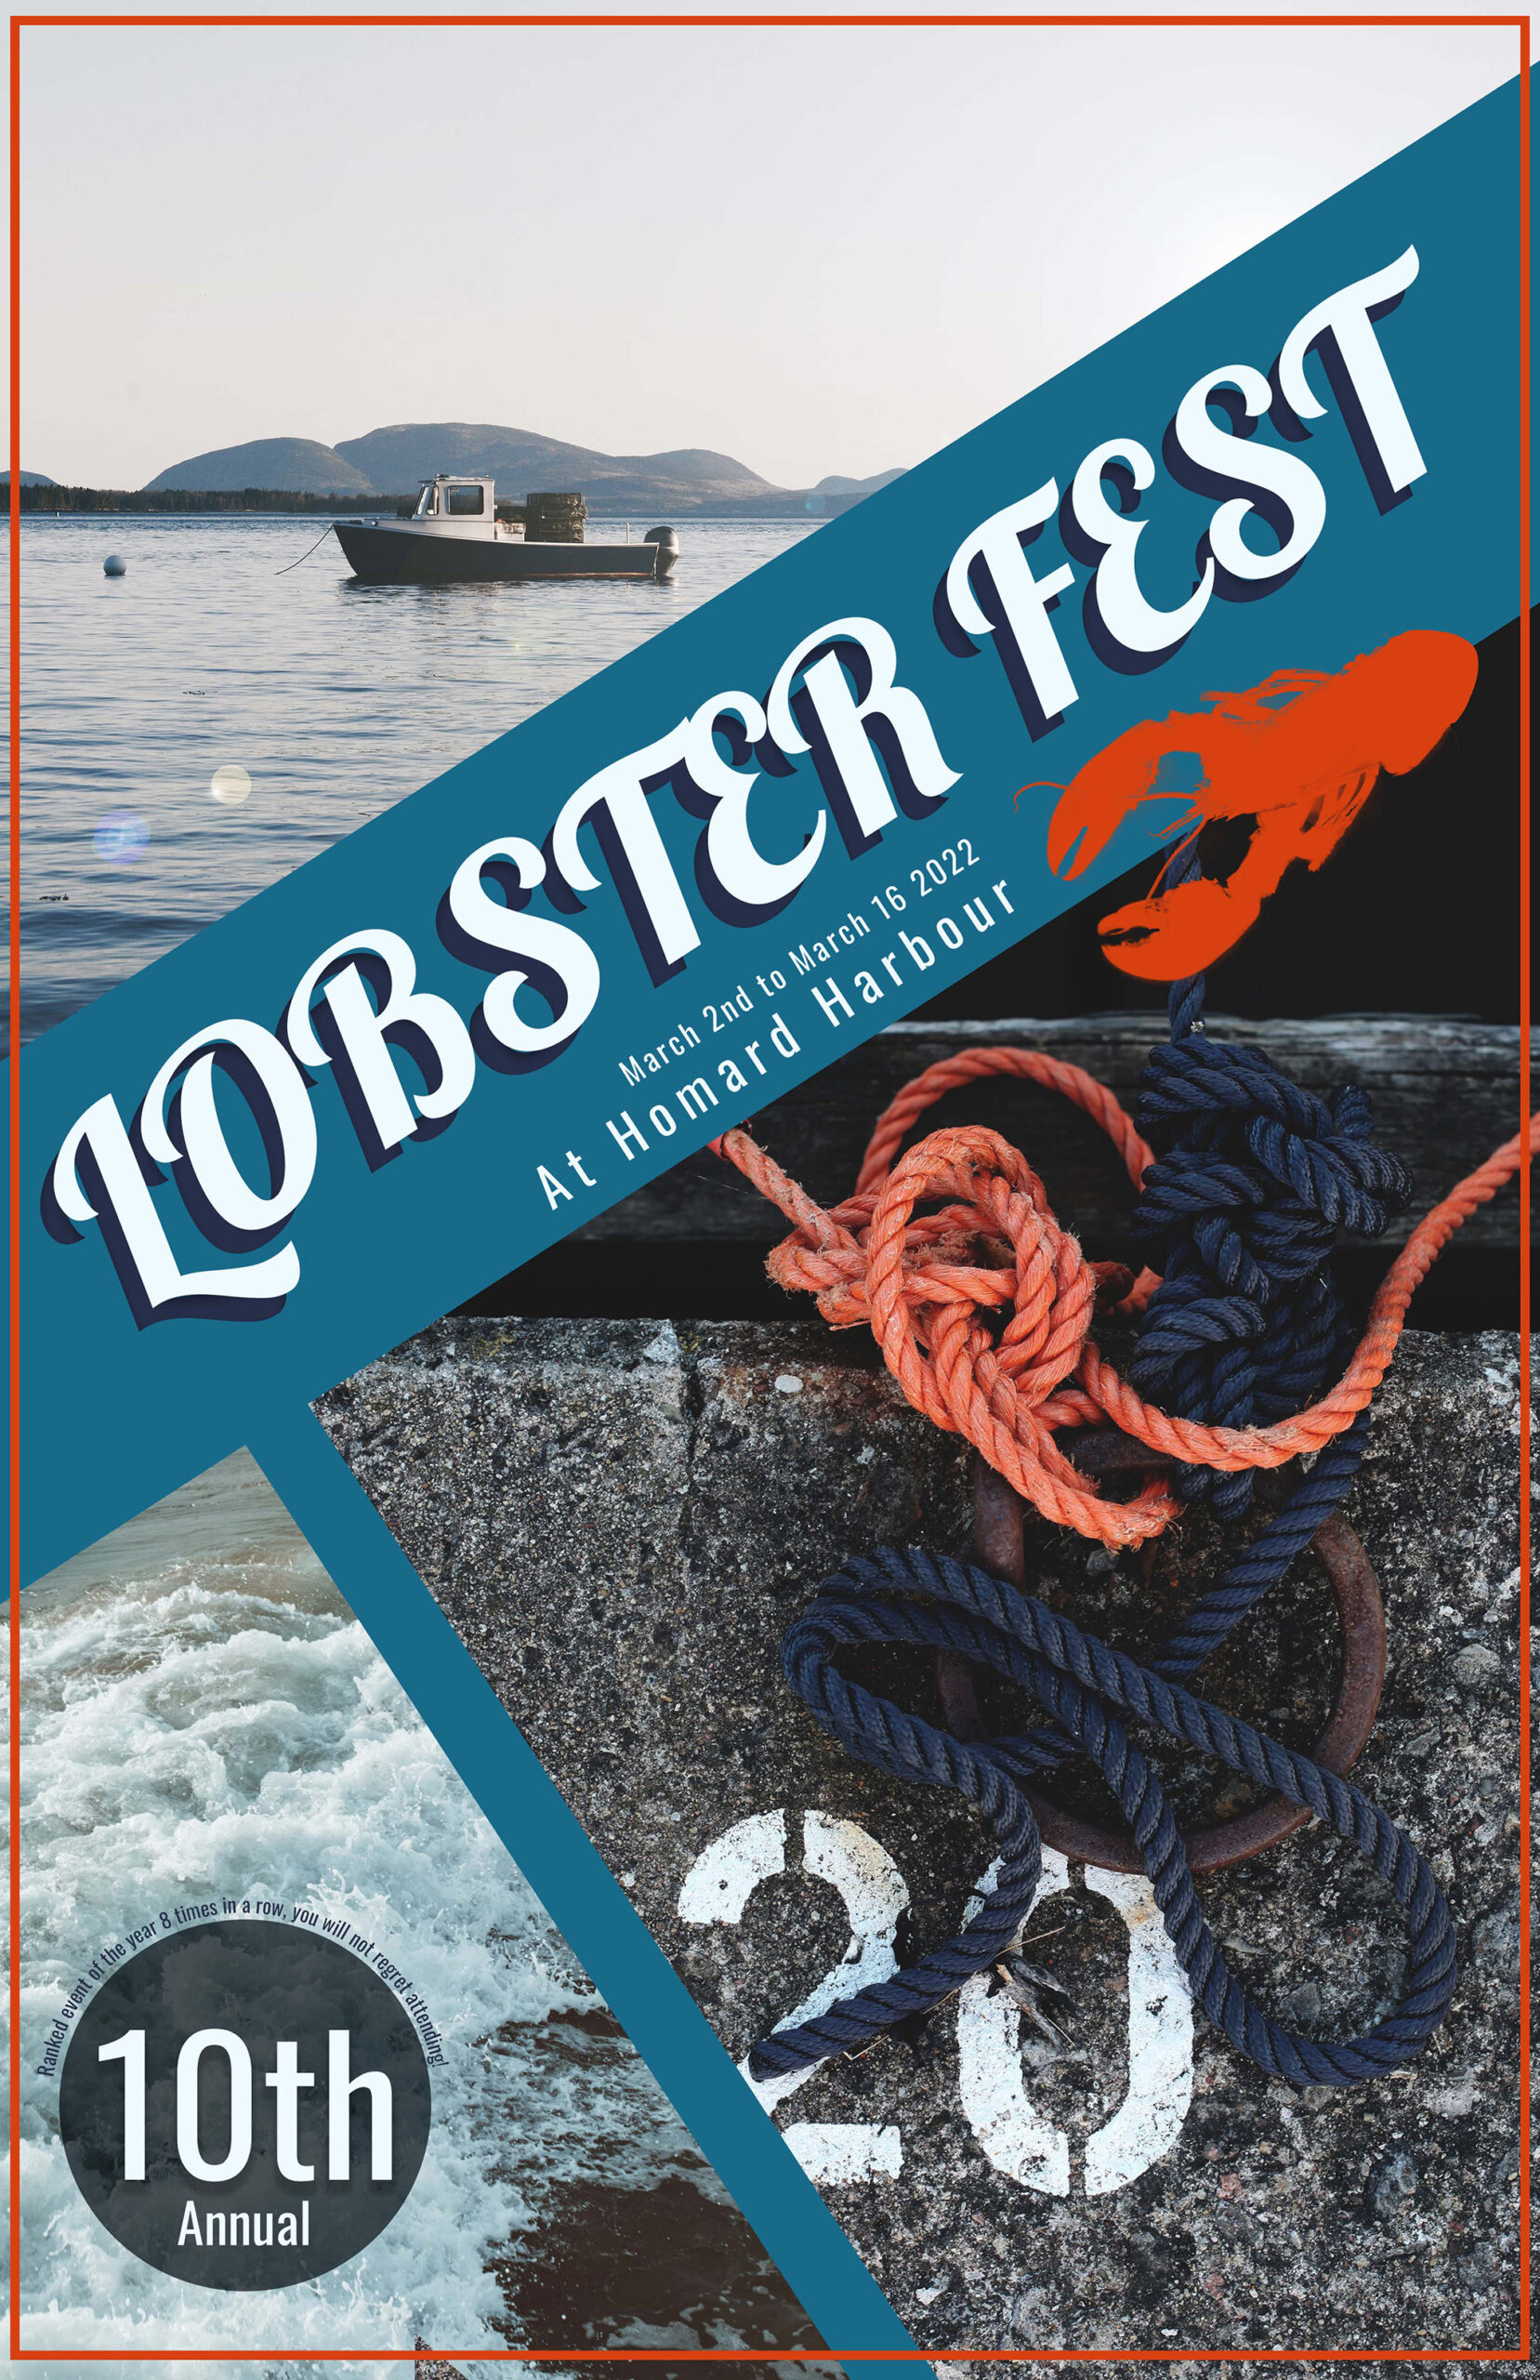 Poster for a lobster fest